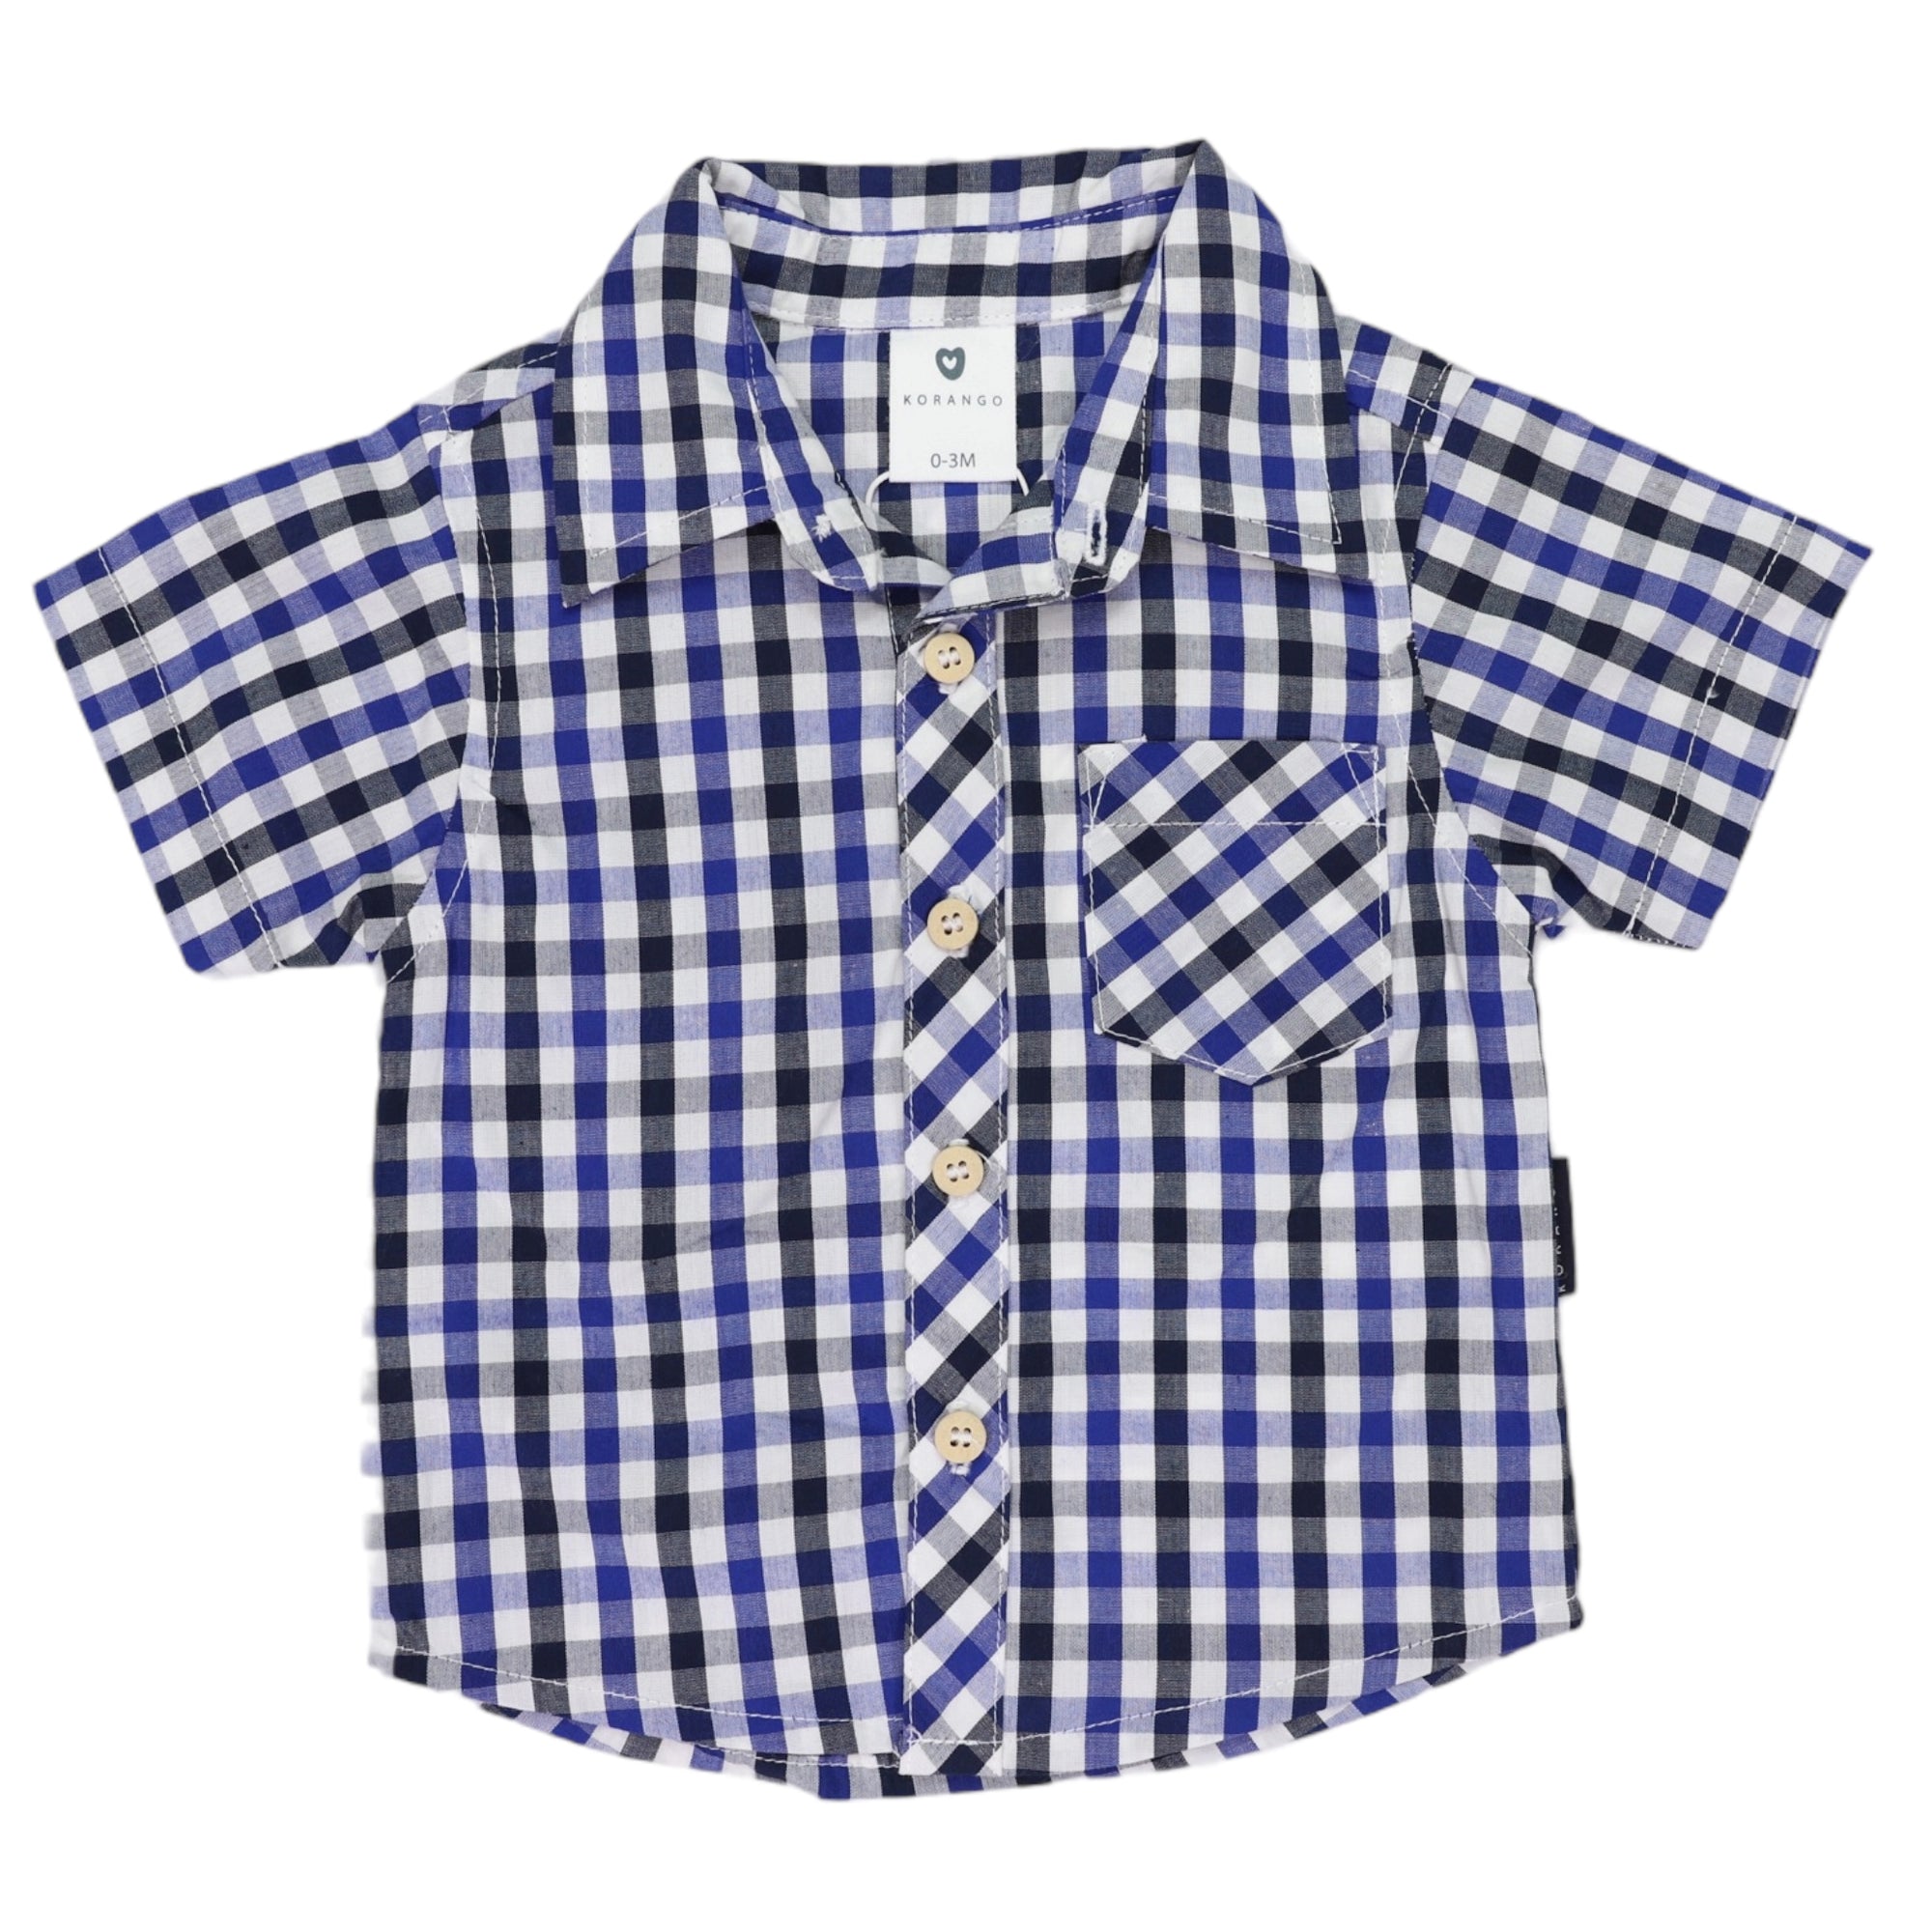 Korango Short Sleeved Shirt Blue Check